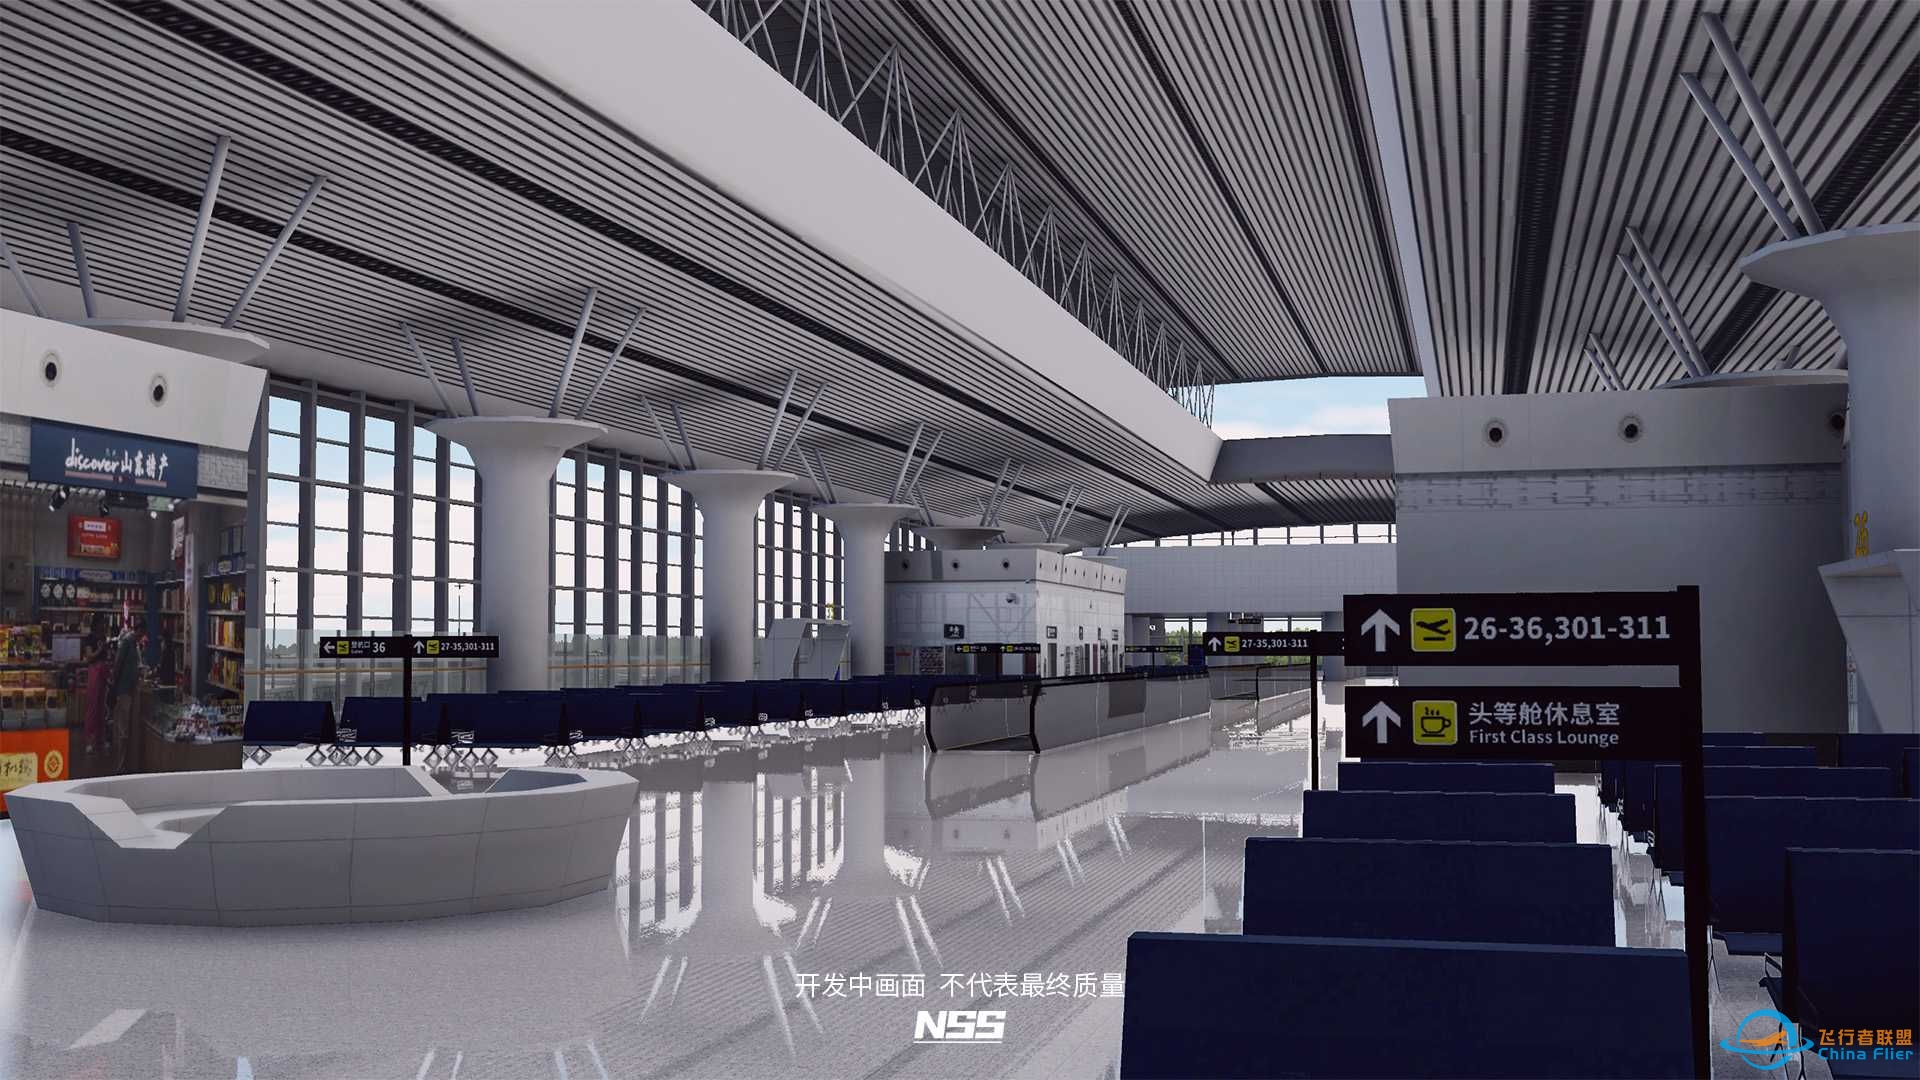 NSS地景开发组 | ZSJN | 济南遥墙国际机场项目最新进展-3547 